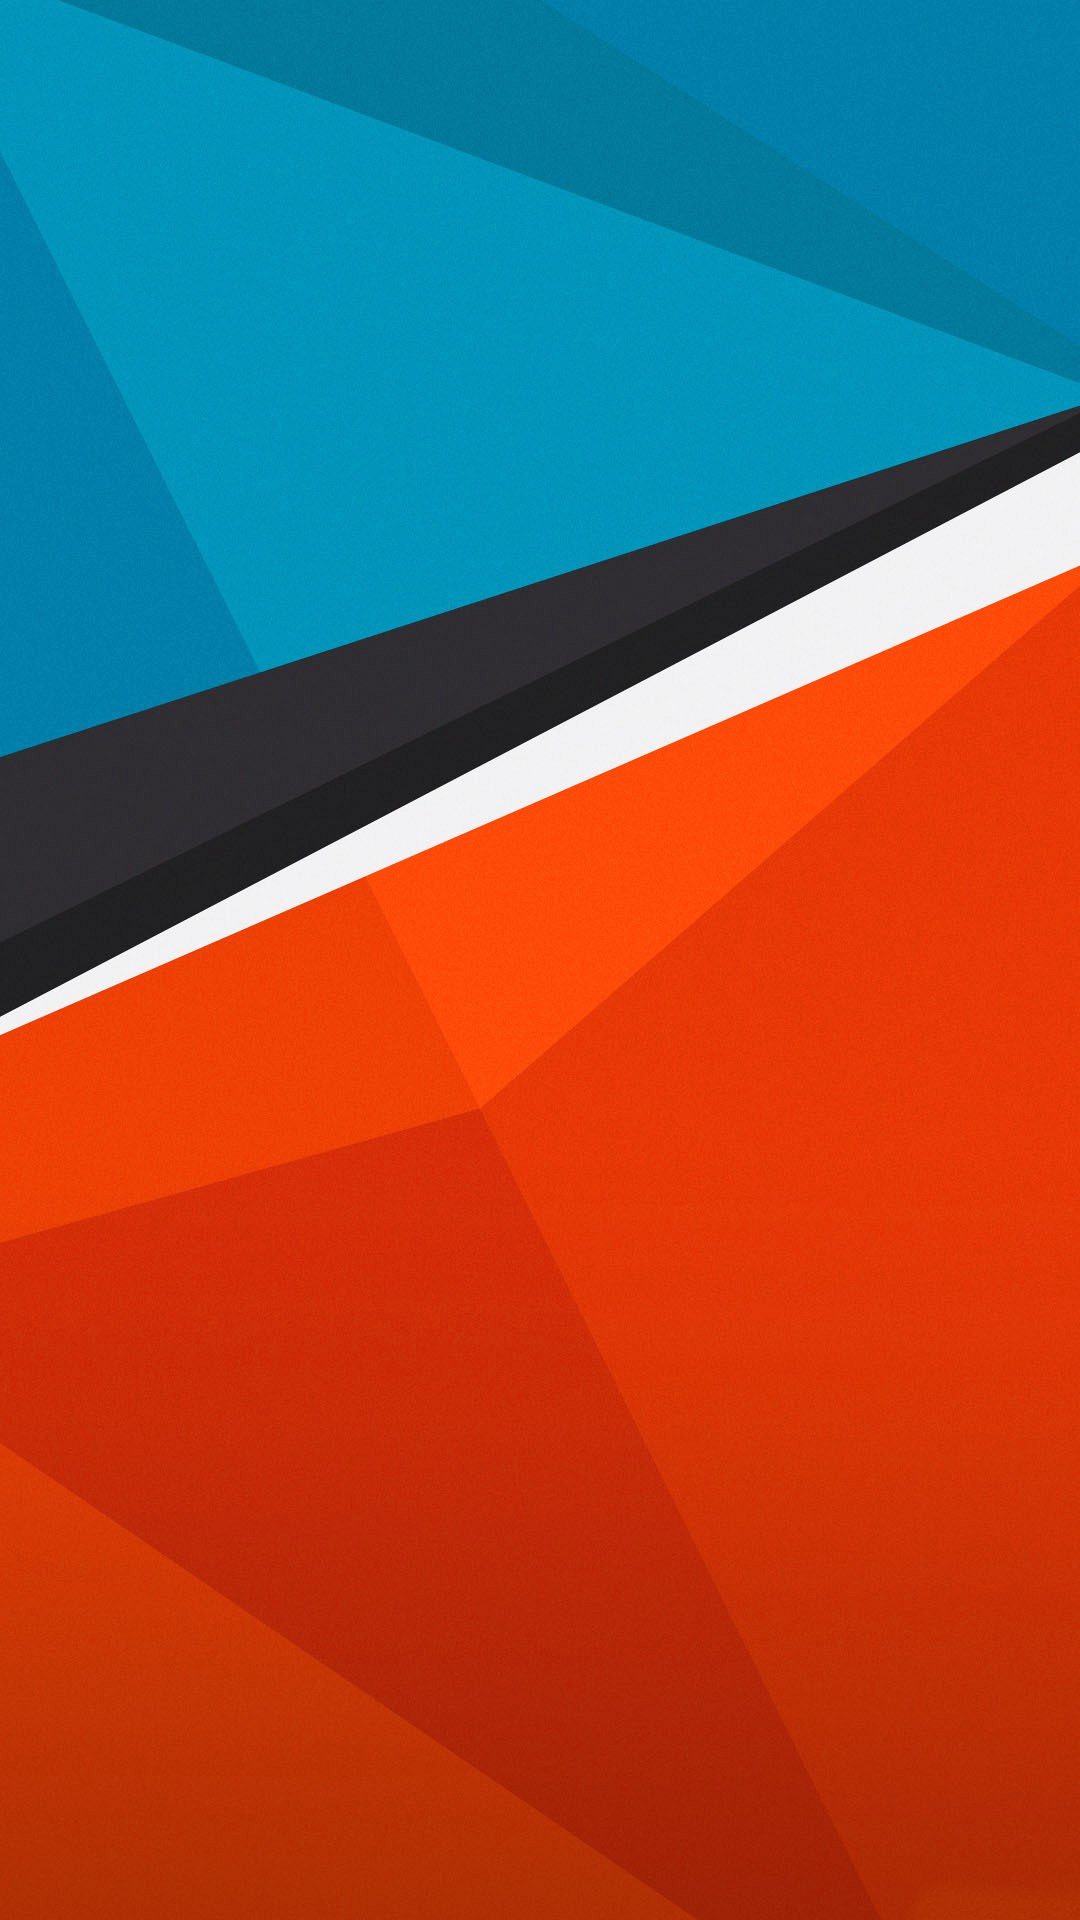 Wallpaper Full HD X Smartphone Orange And Light Blue